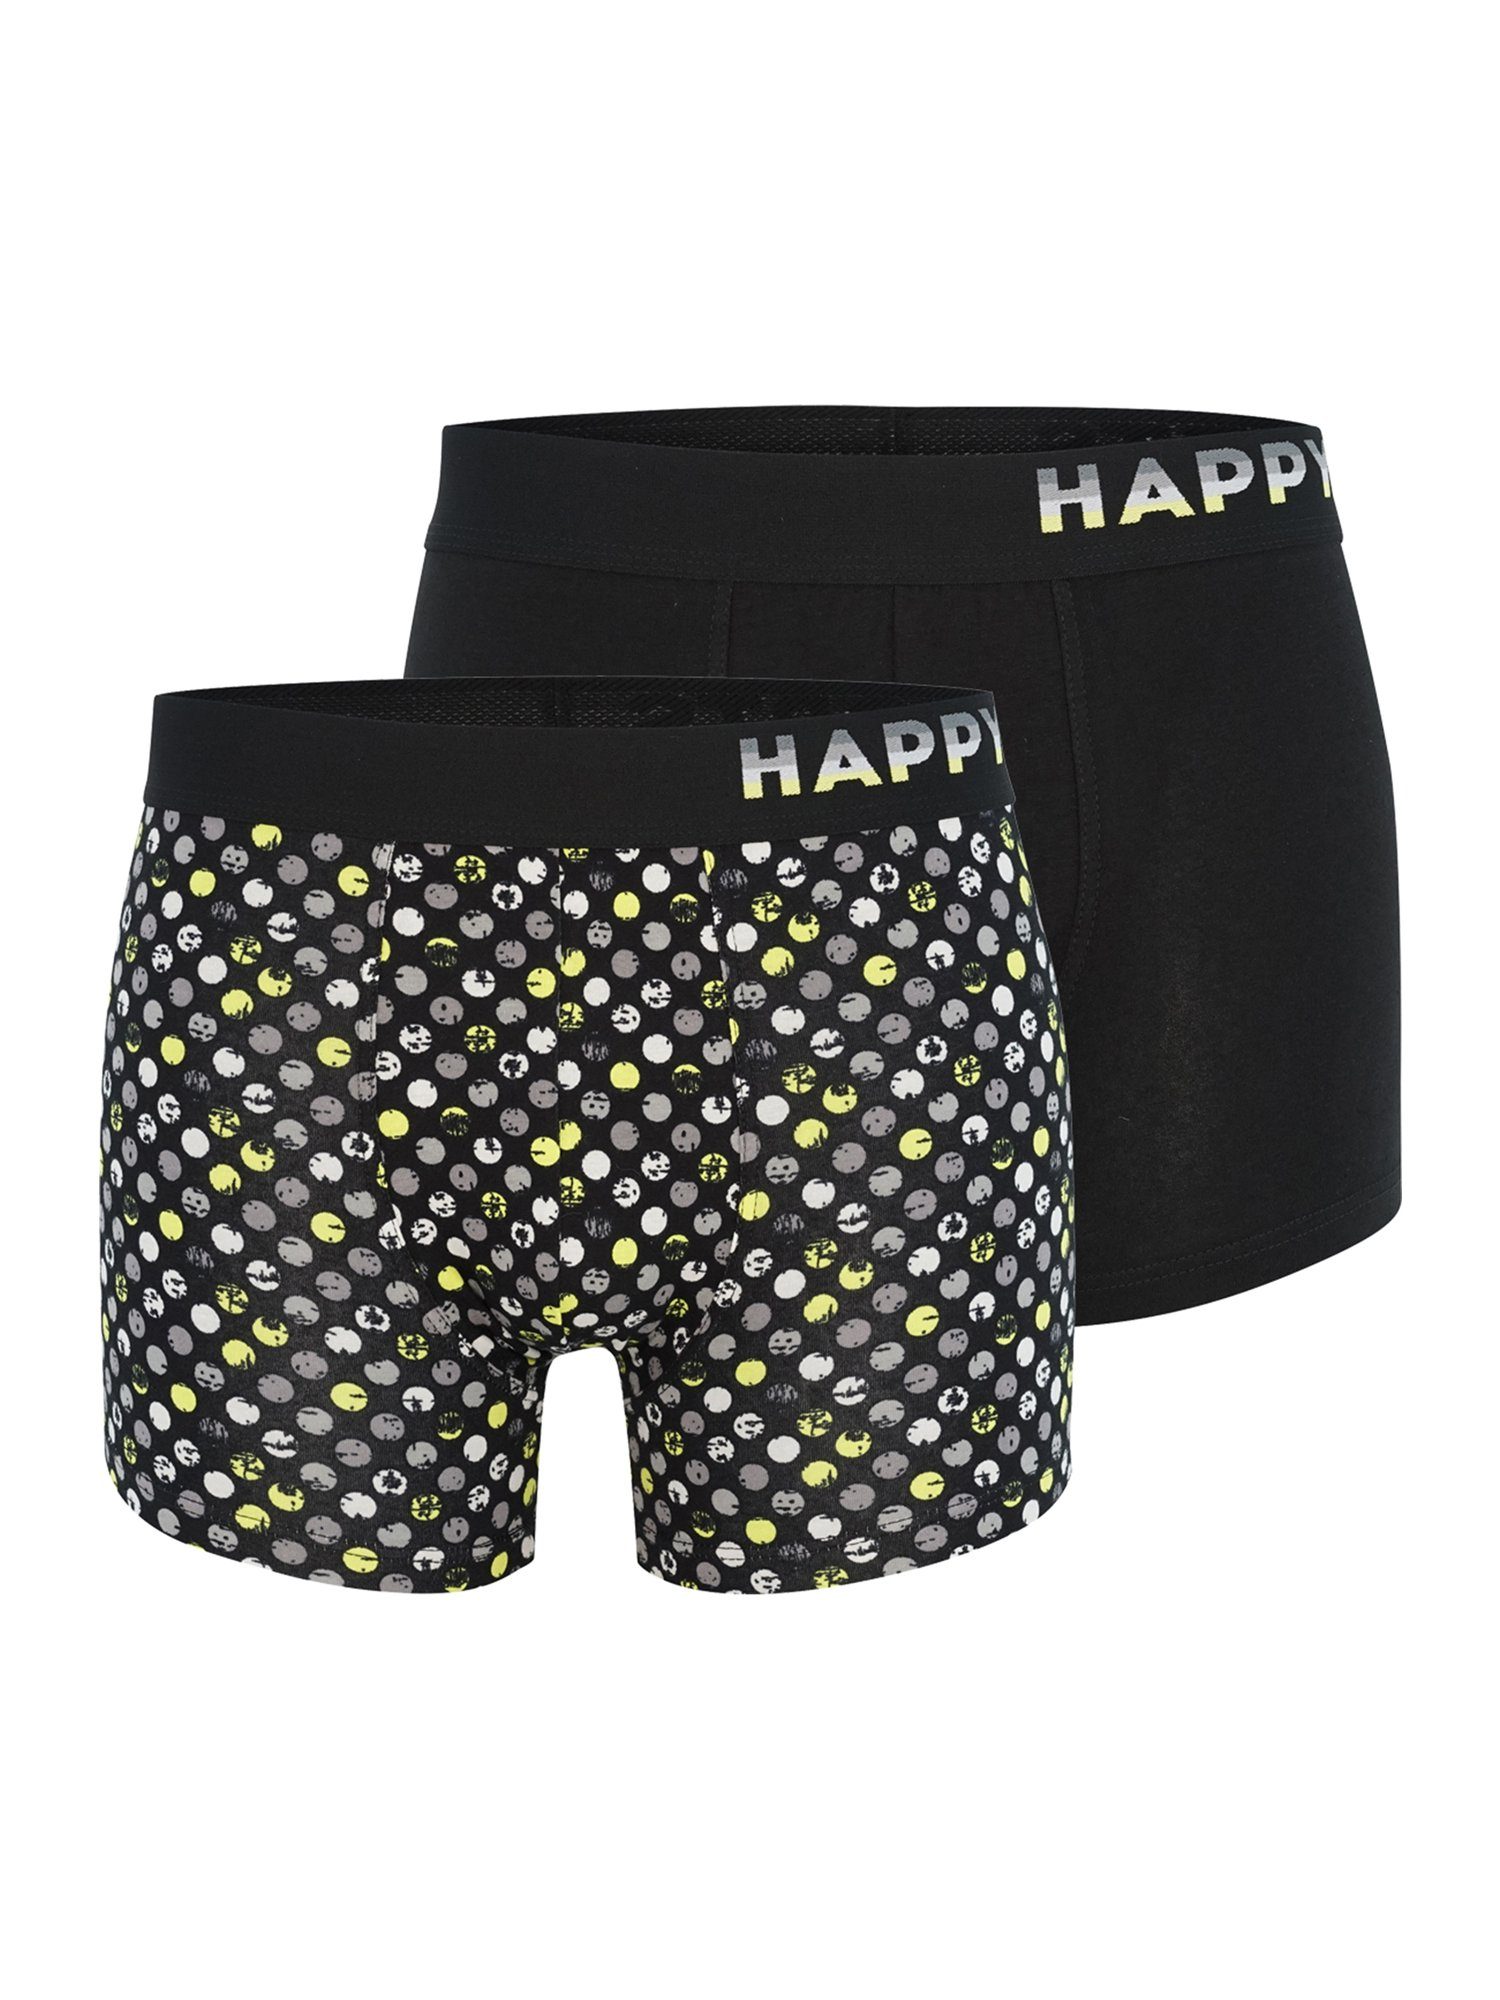 Trunks Polka Motivprint Neon SHORTS Pants Retro HAPPY